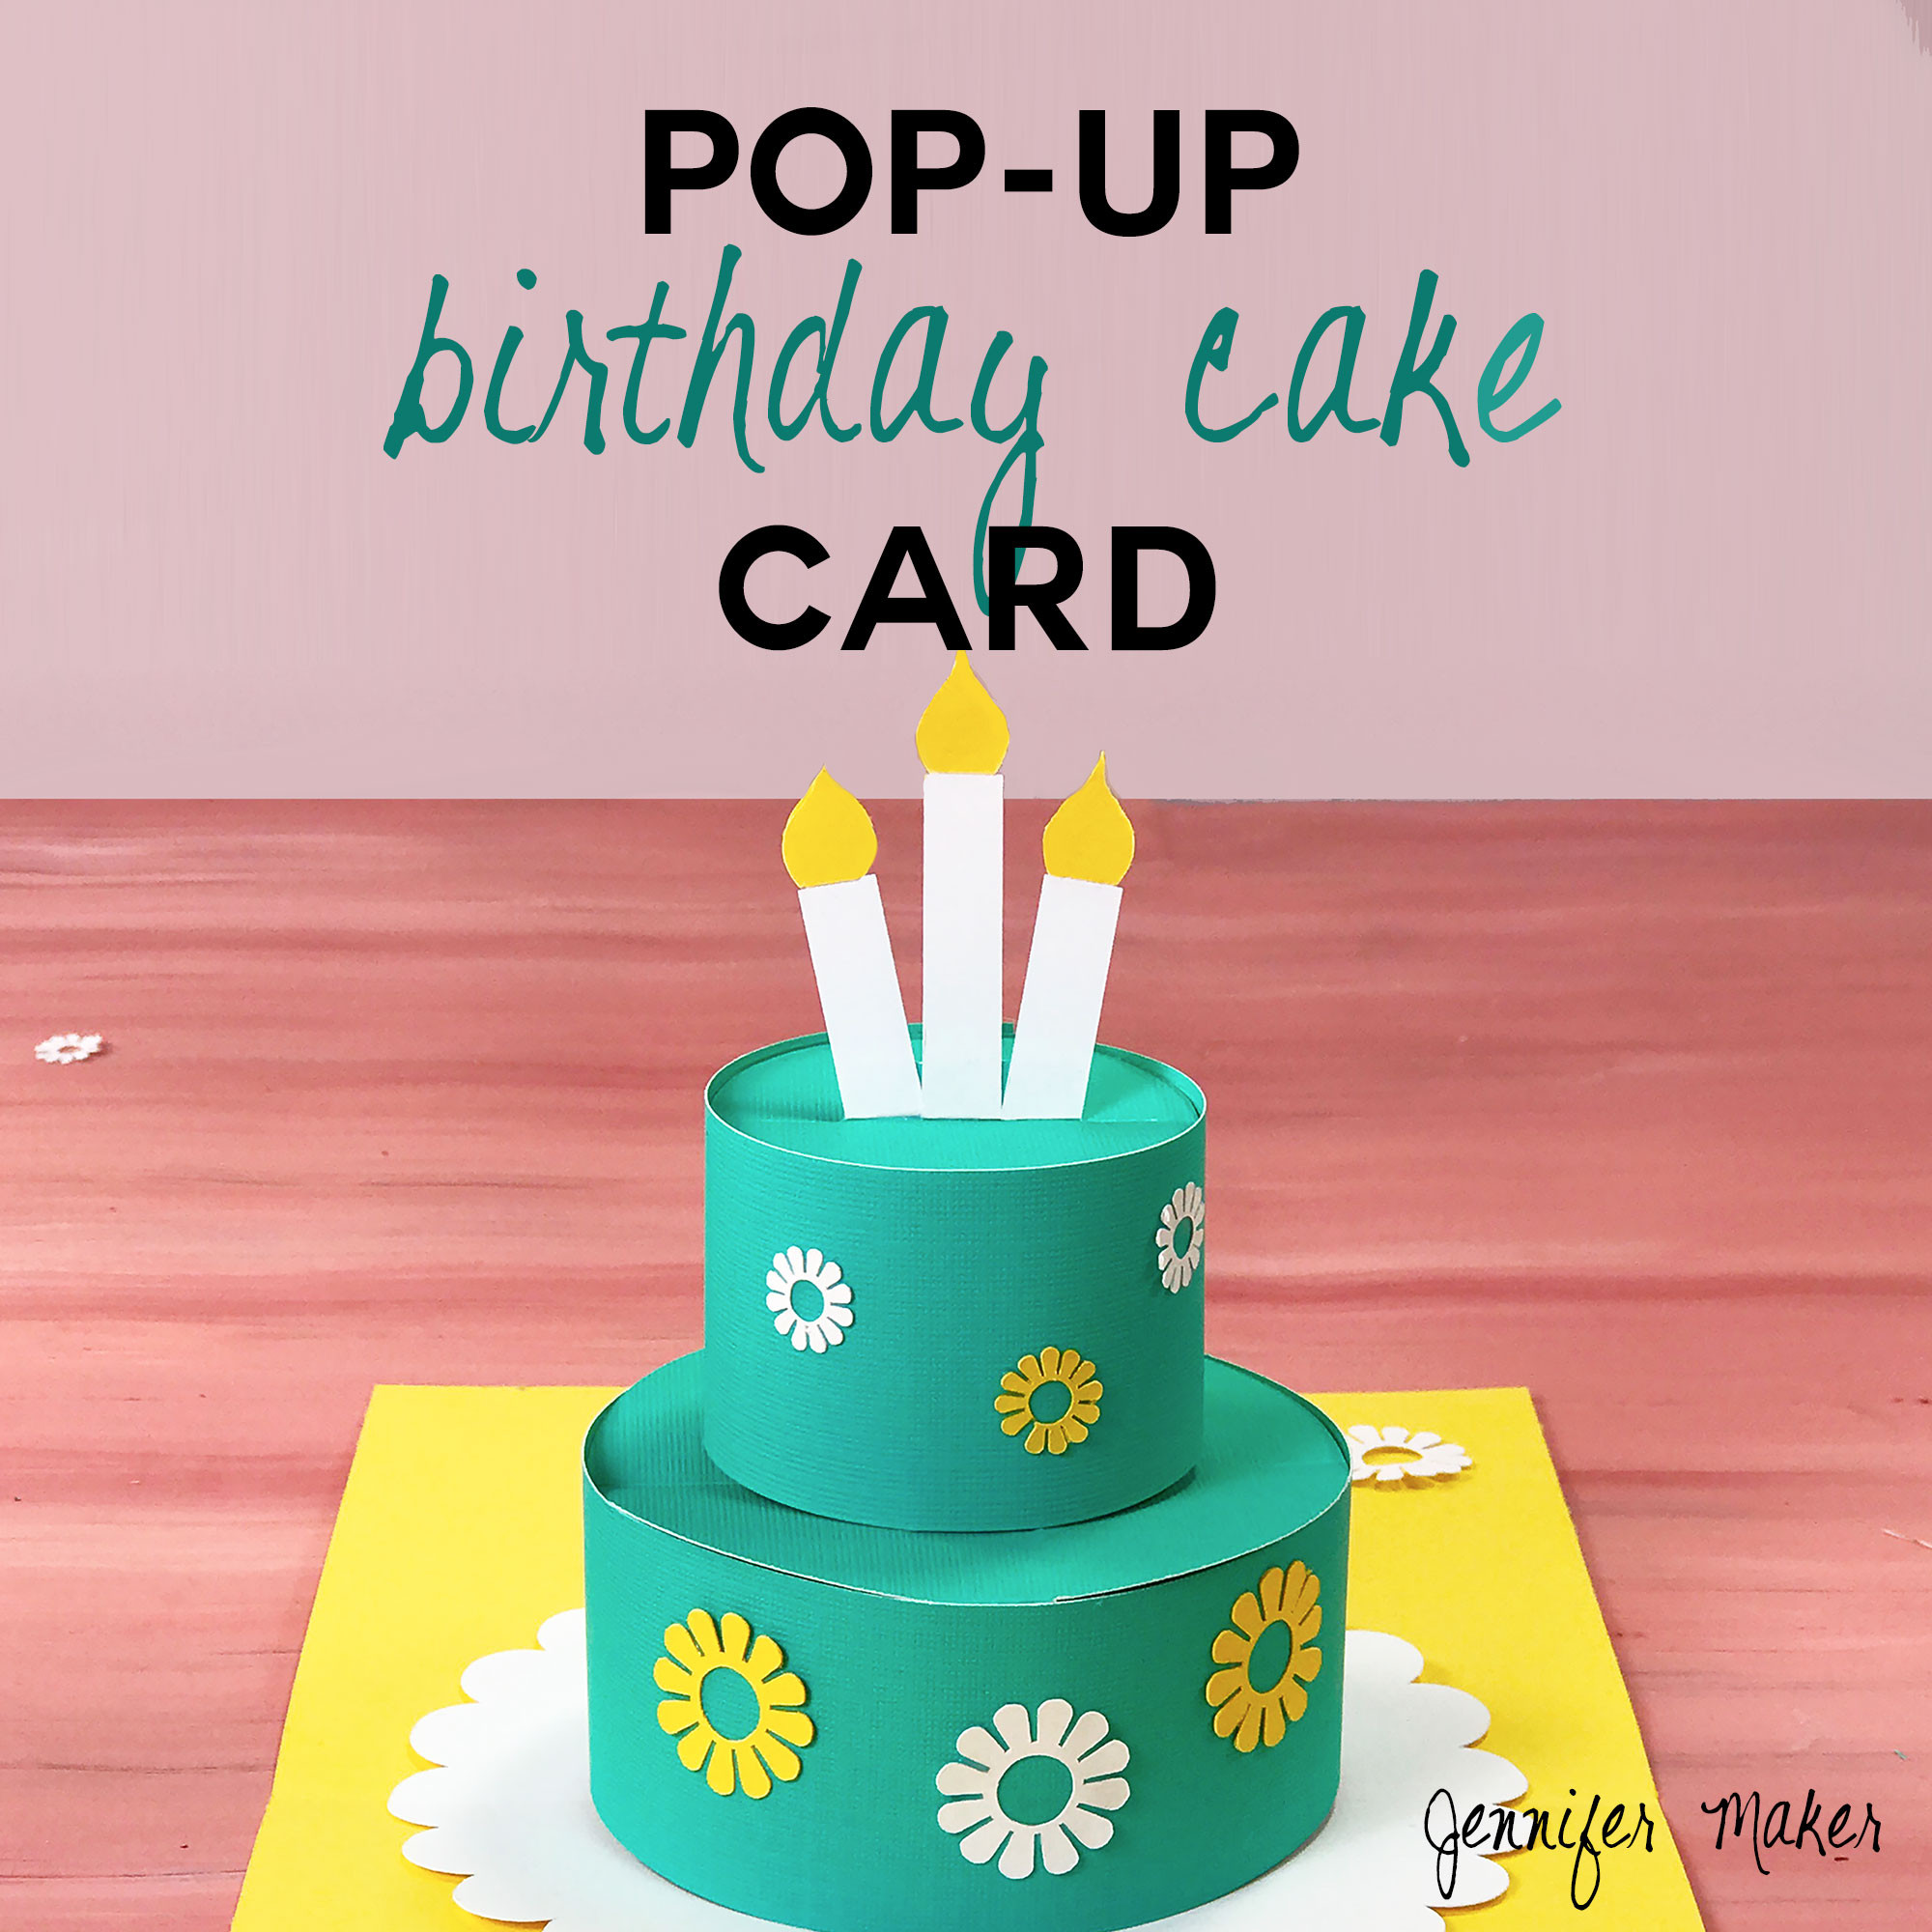 Birthday Cake Cards
 How to Make a Pop Up Birthday Cake Card Jennifer Maker